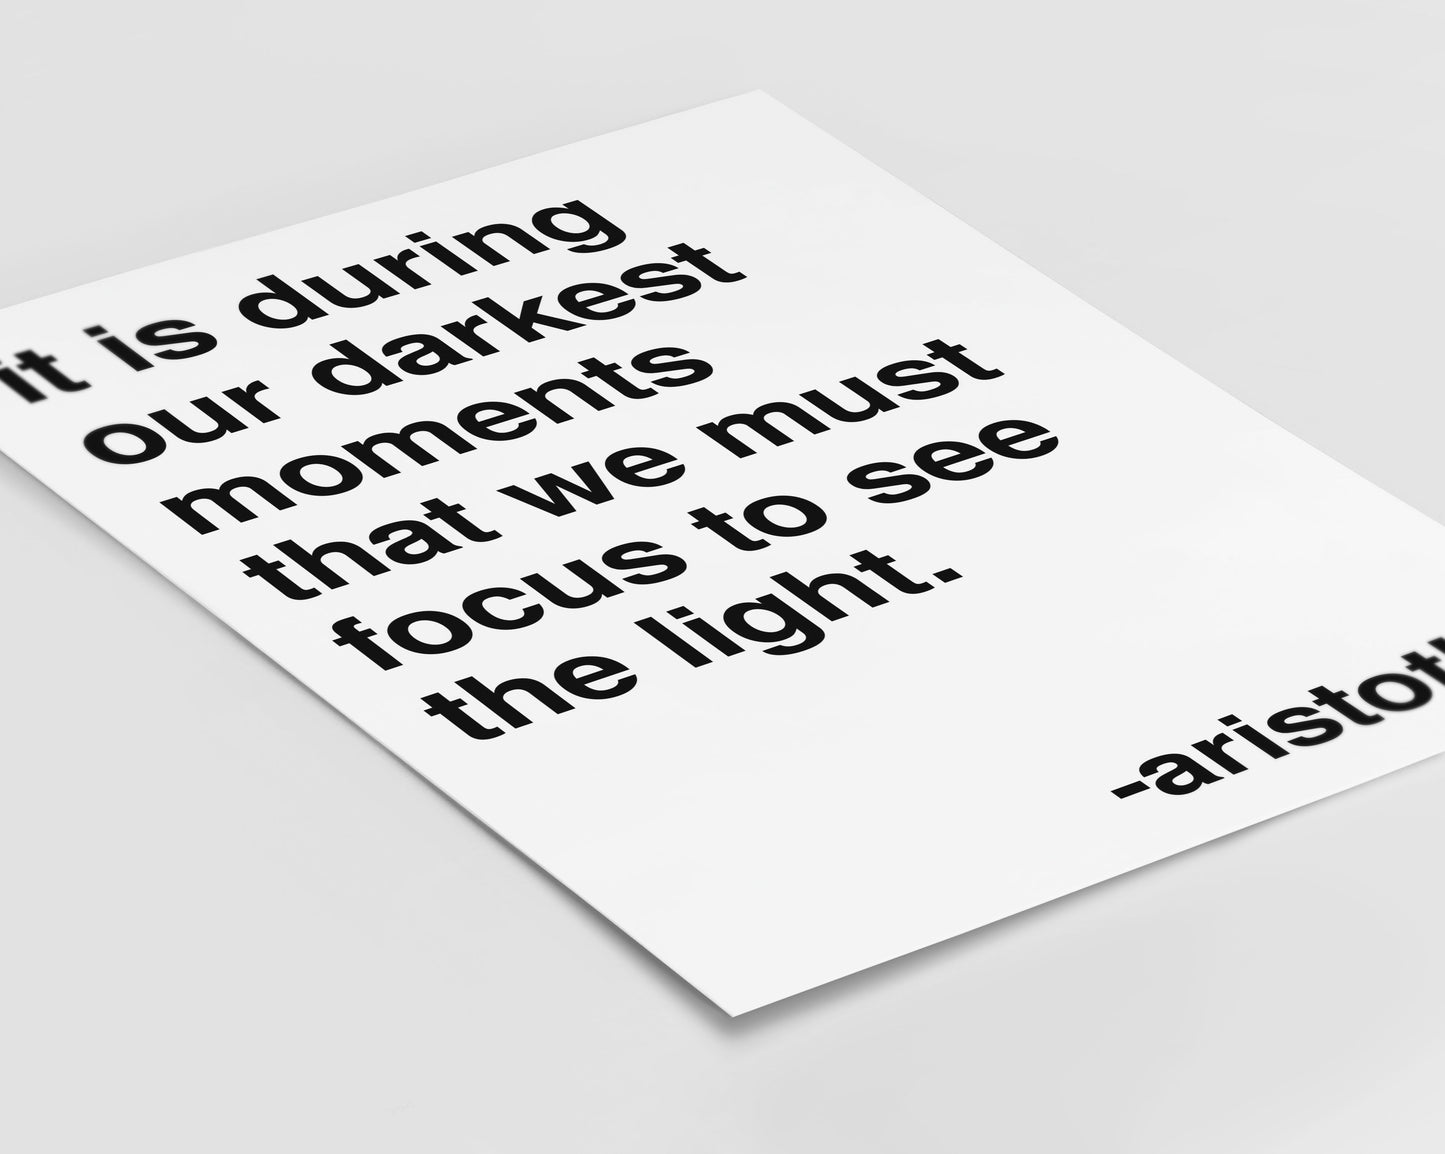 Darkest Moments Aristotle Statement White Print